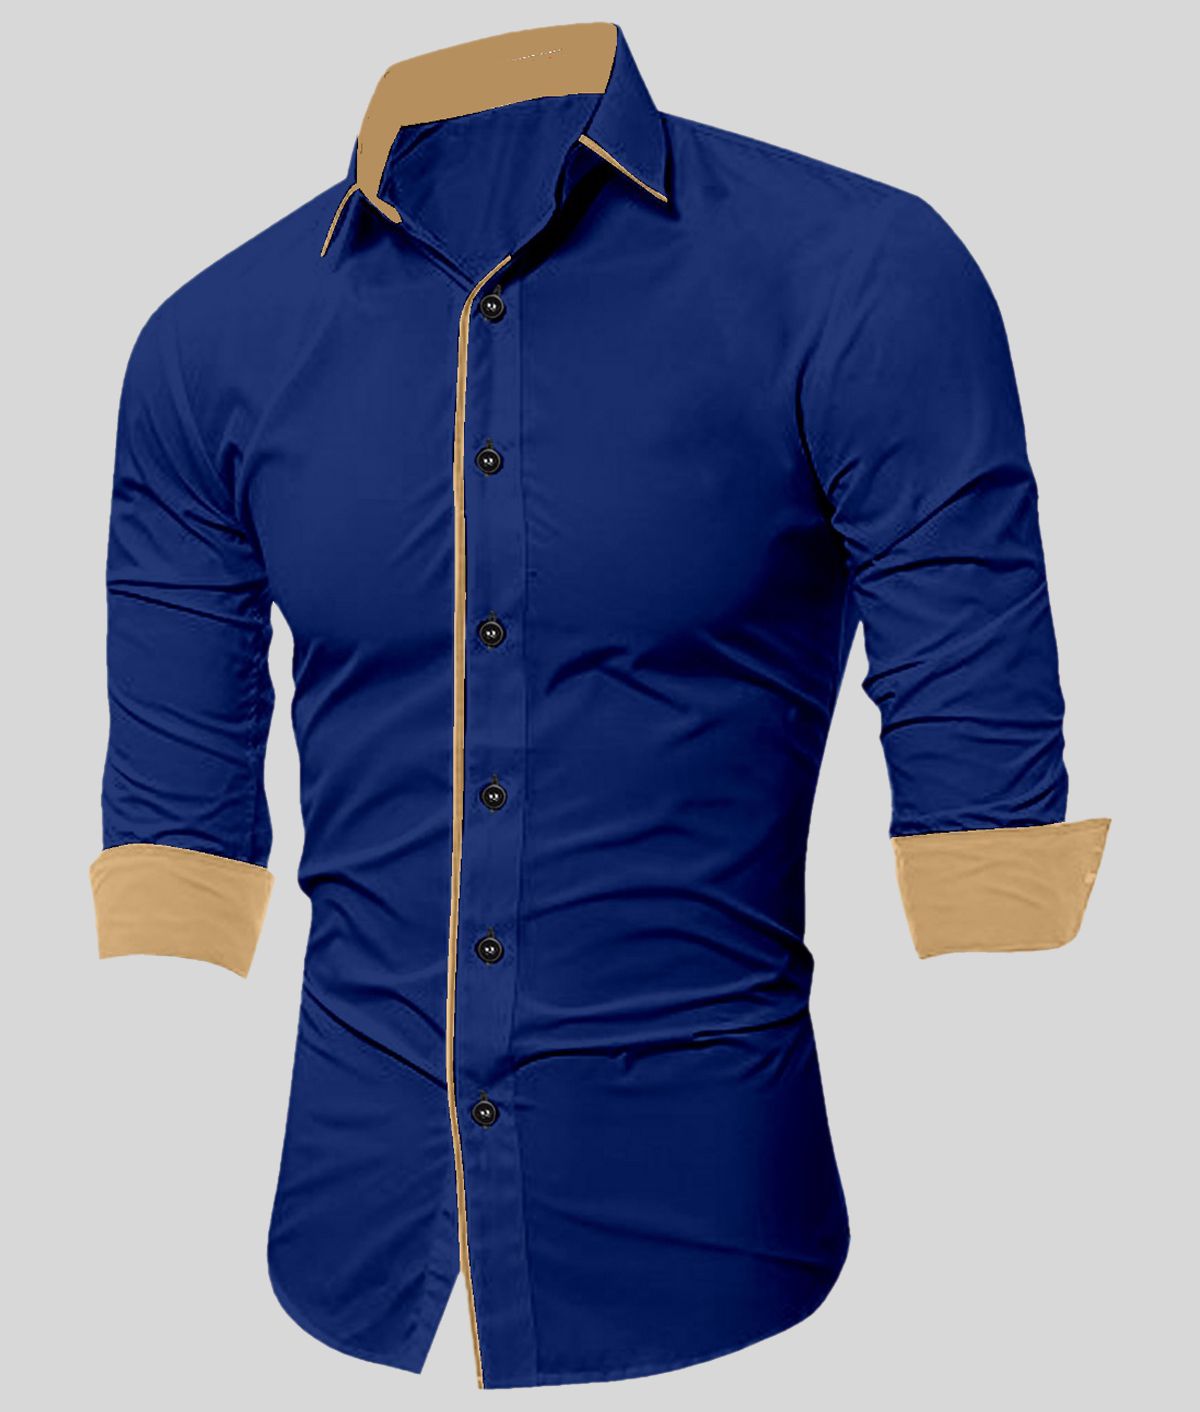 P&V CREATIONS - Blue Cotton Blend Slim Fit Men's Casual Shirt (Pack of 1)